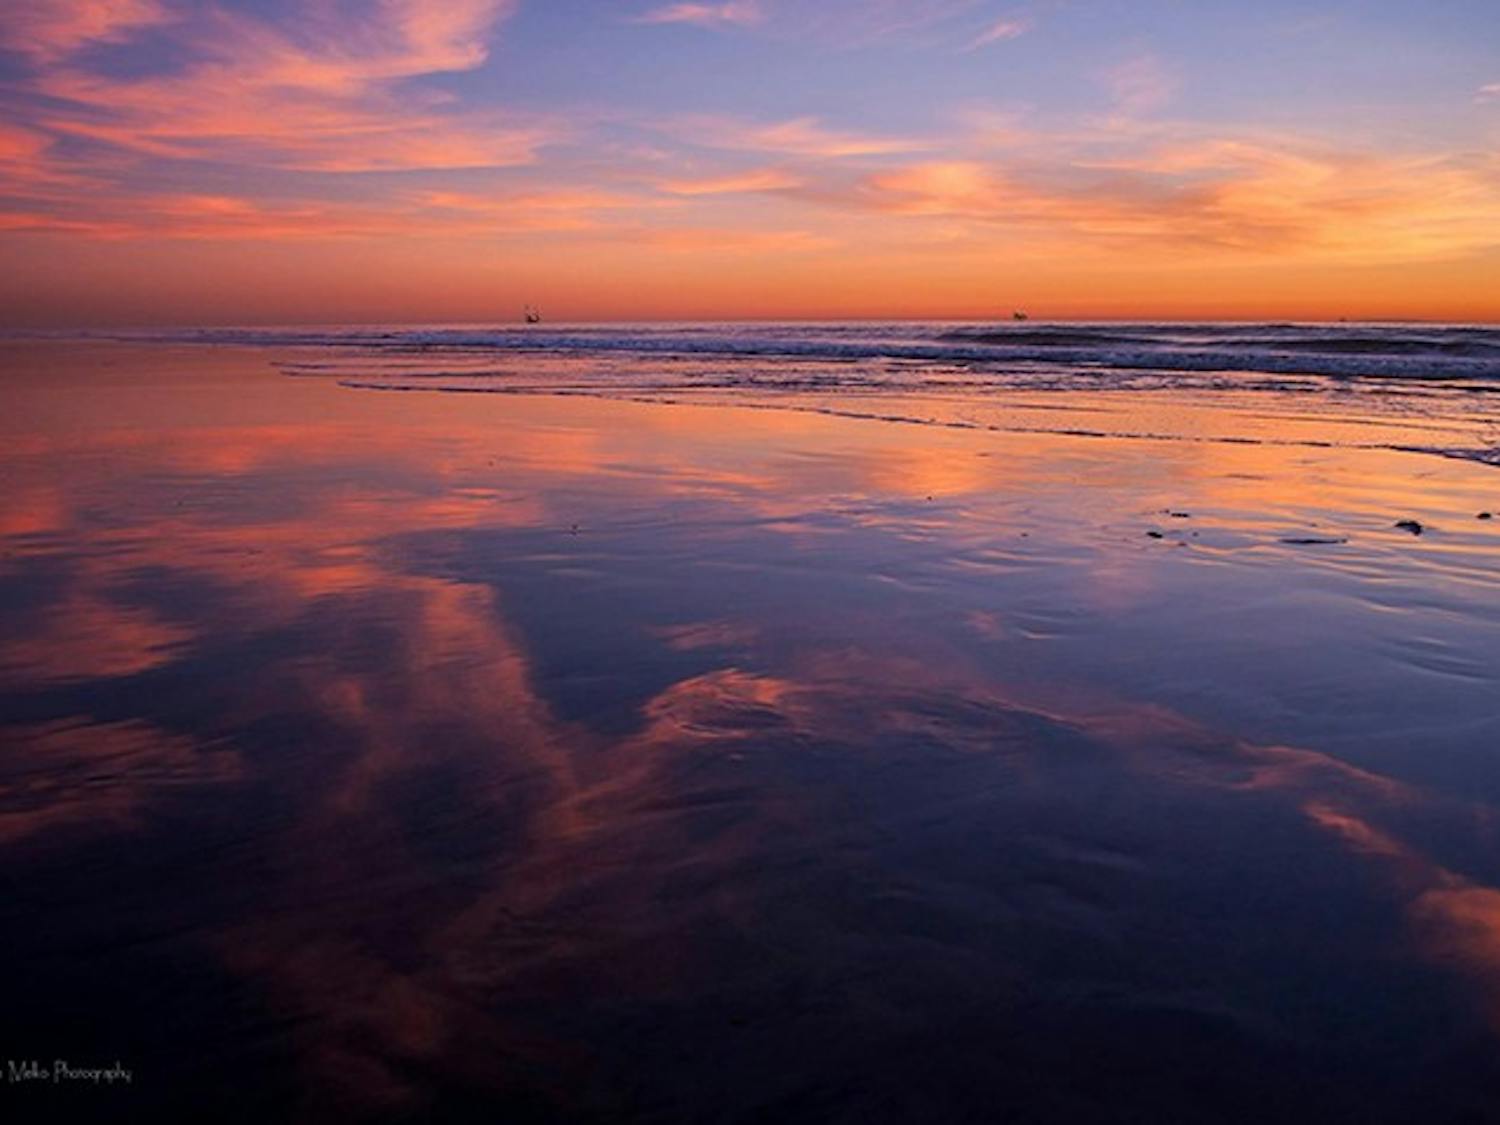 Sunset at Bolsa Chica State Beach, California